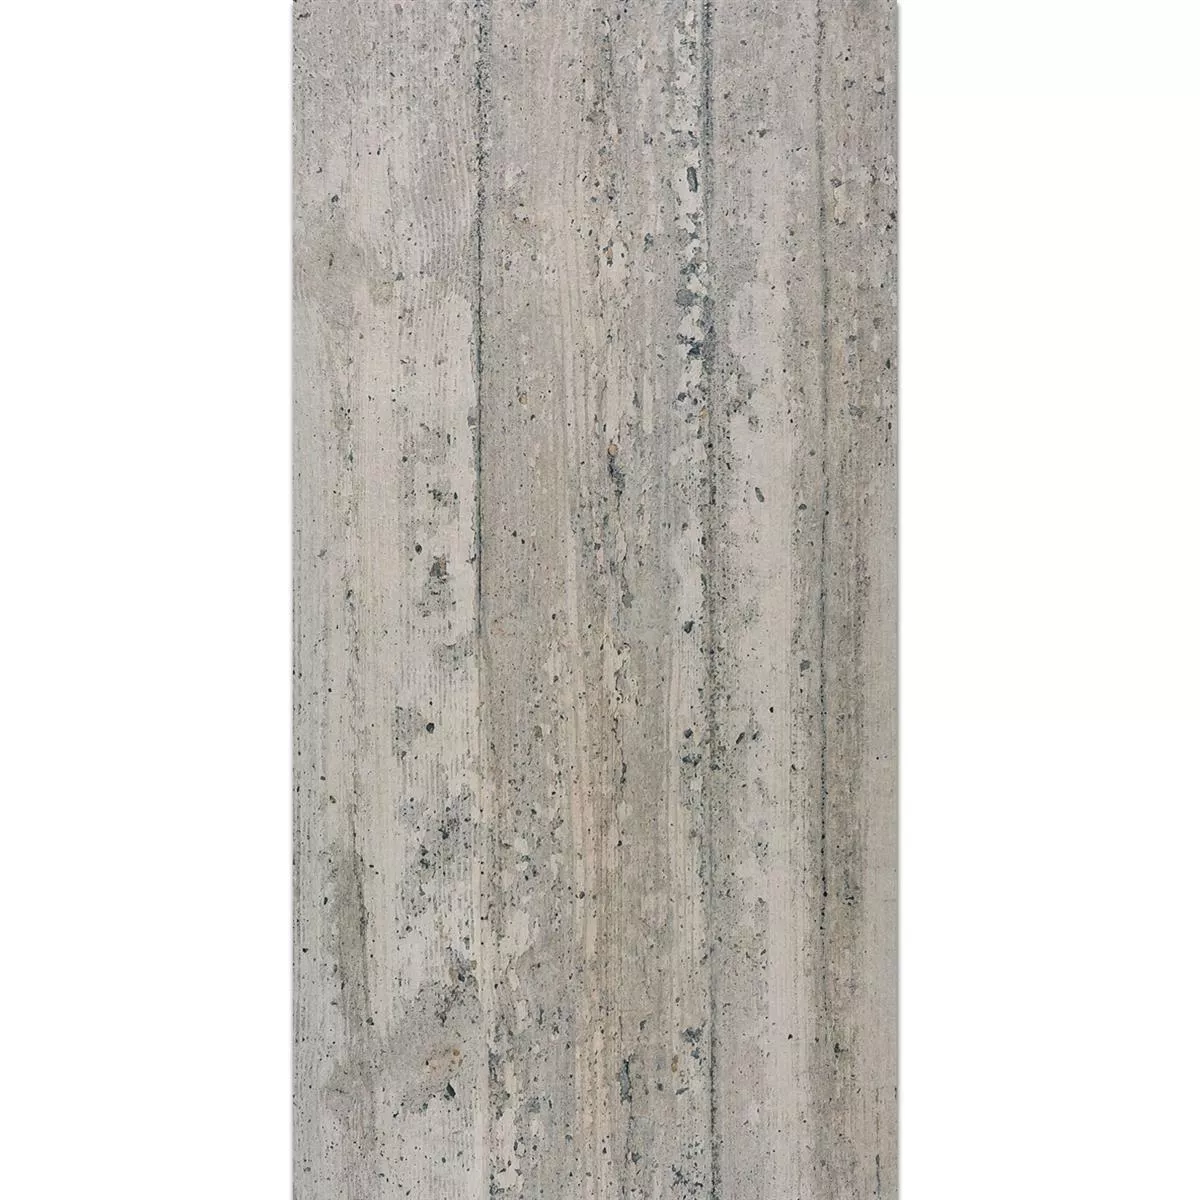 Carrelage Sol Et Mur Optique Ciment Sambuco Antique 30x90cm